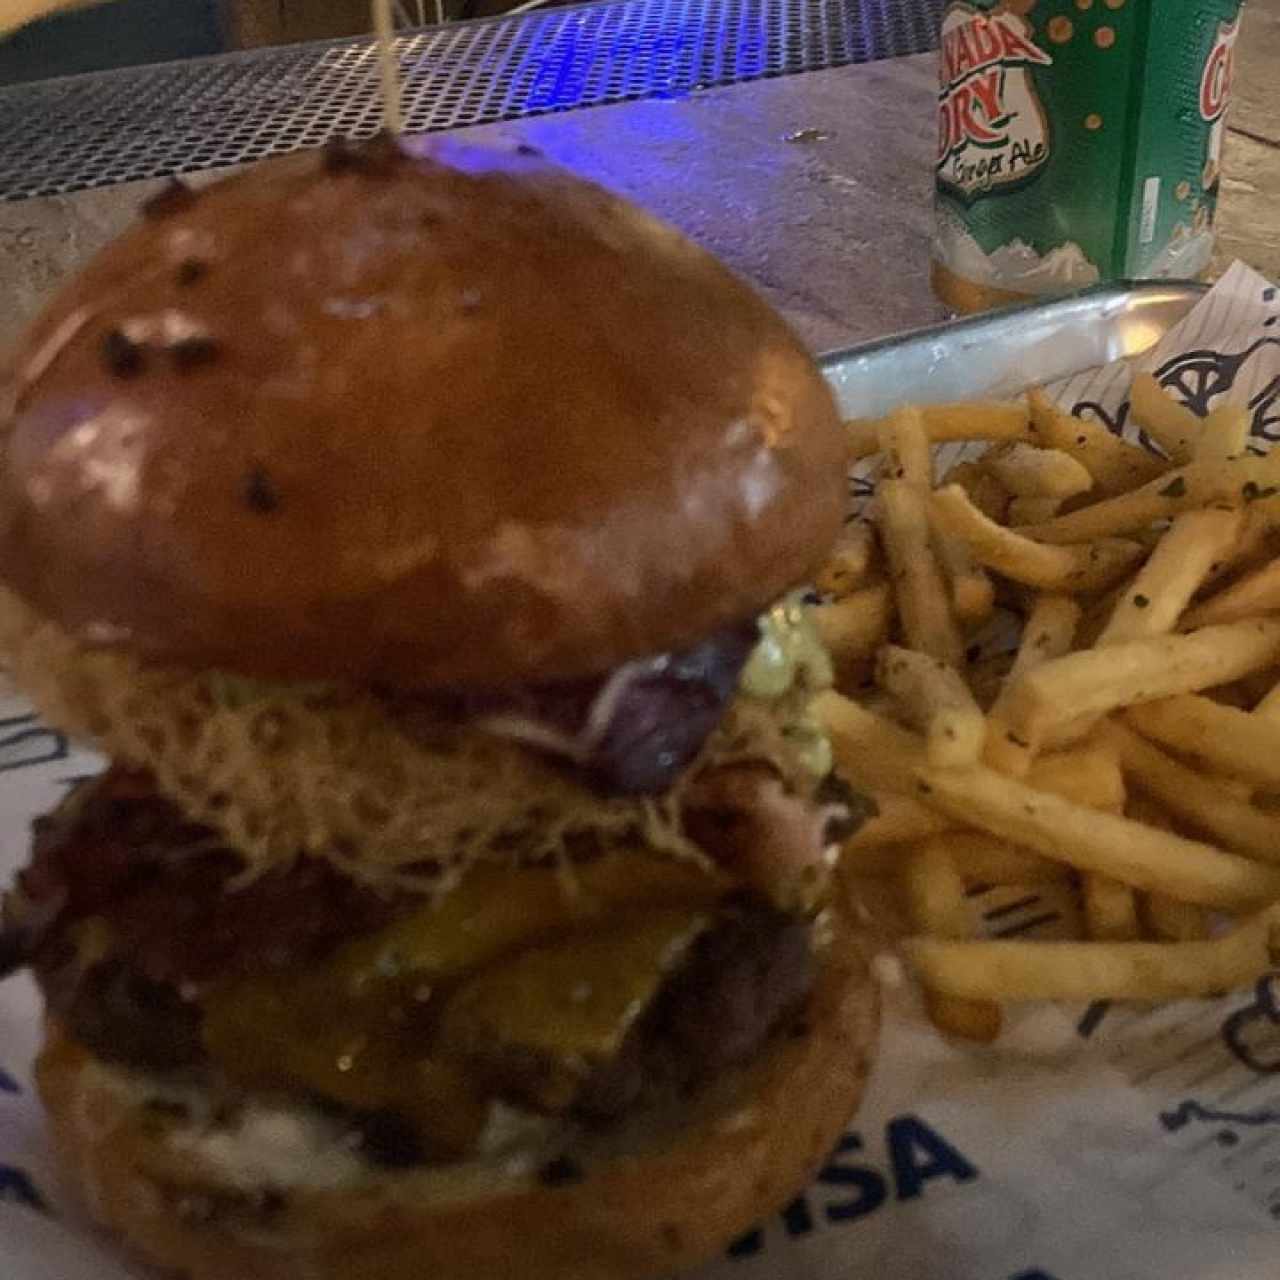 Hamburguesa Burger Week